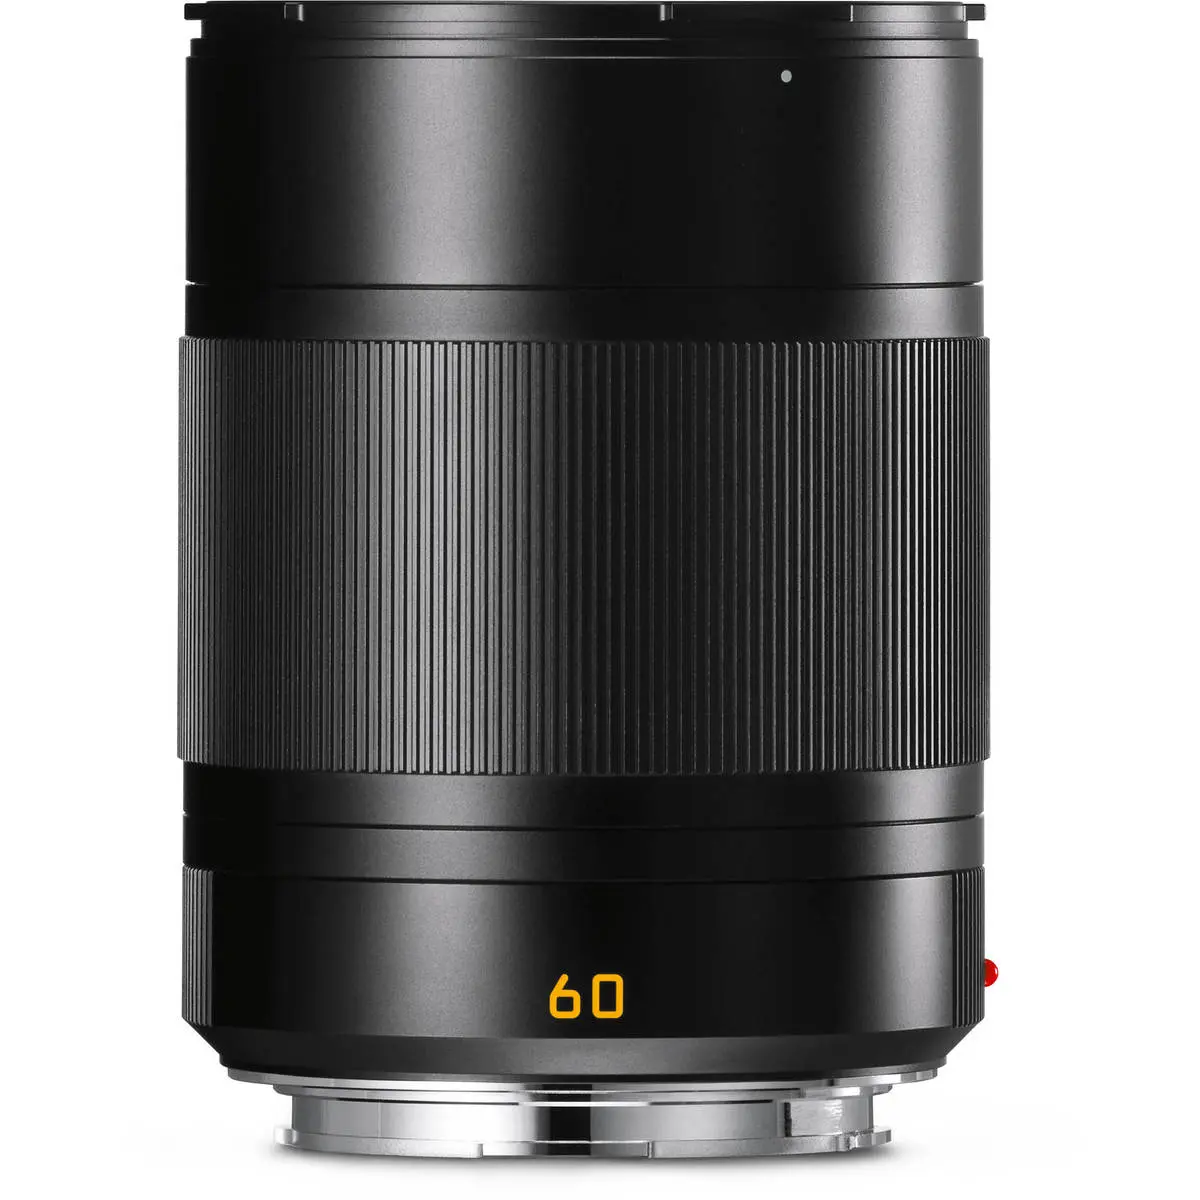 2. Leica APO-Macro-Elmarit-TL 60mm F2.8 ASPH (Black) Lens